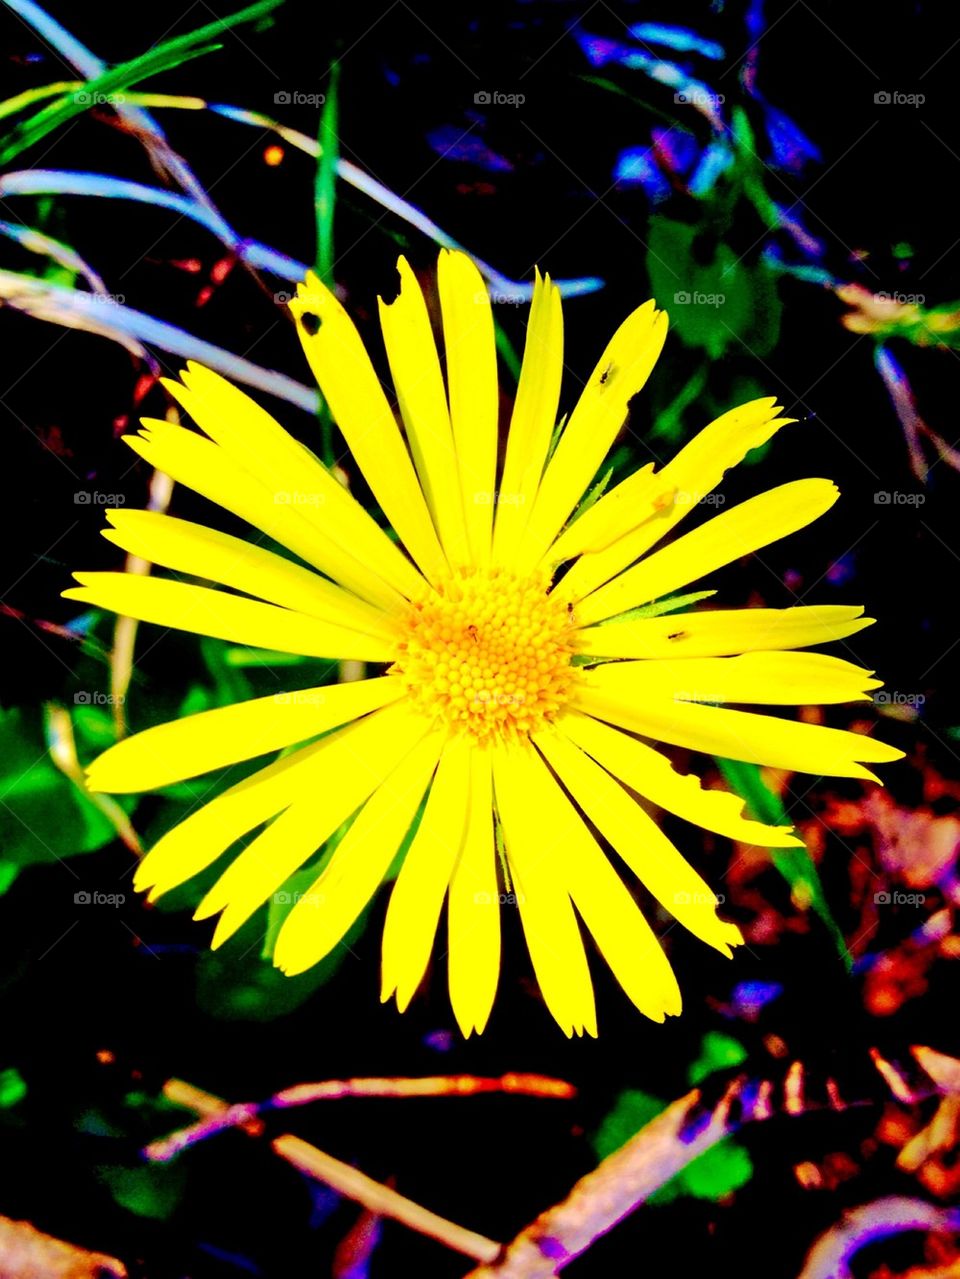 Beautiful yellow flower